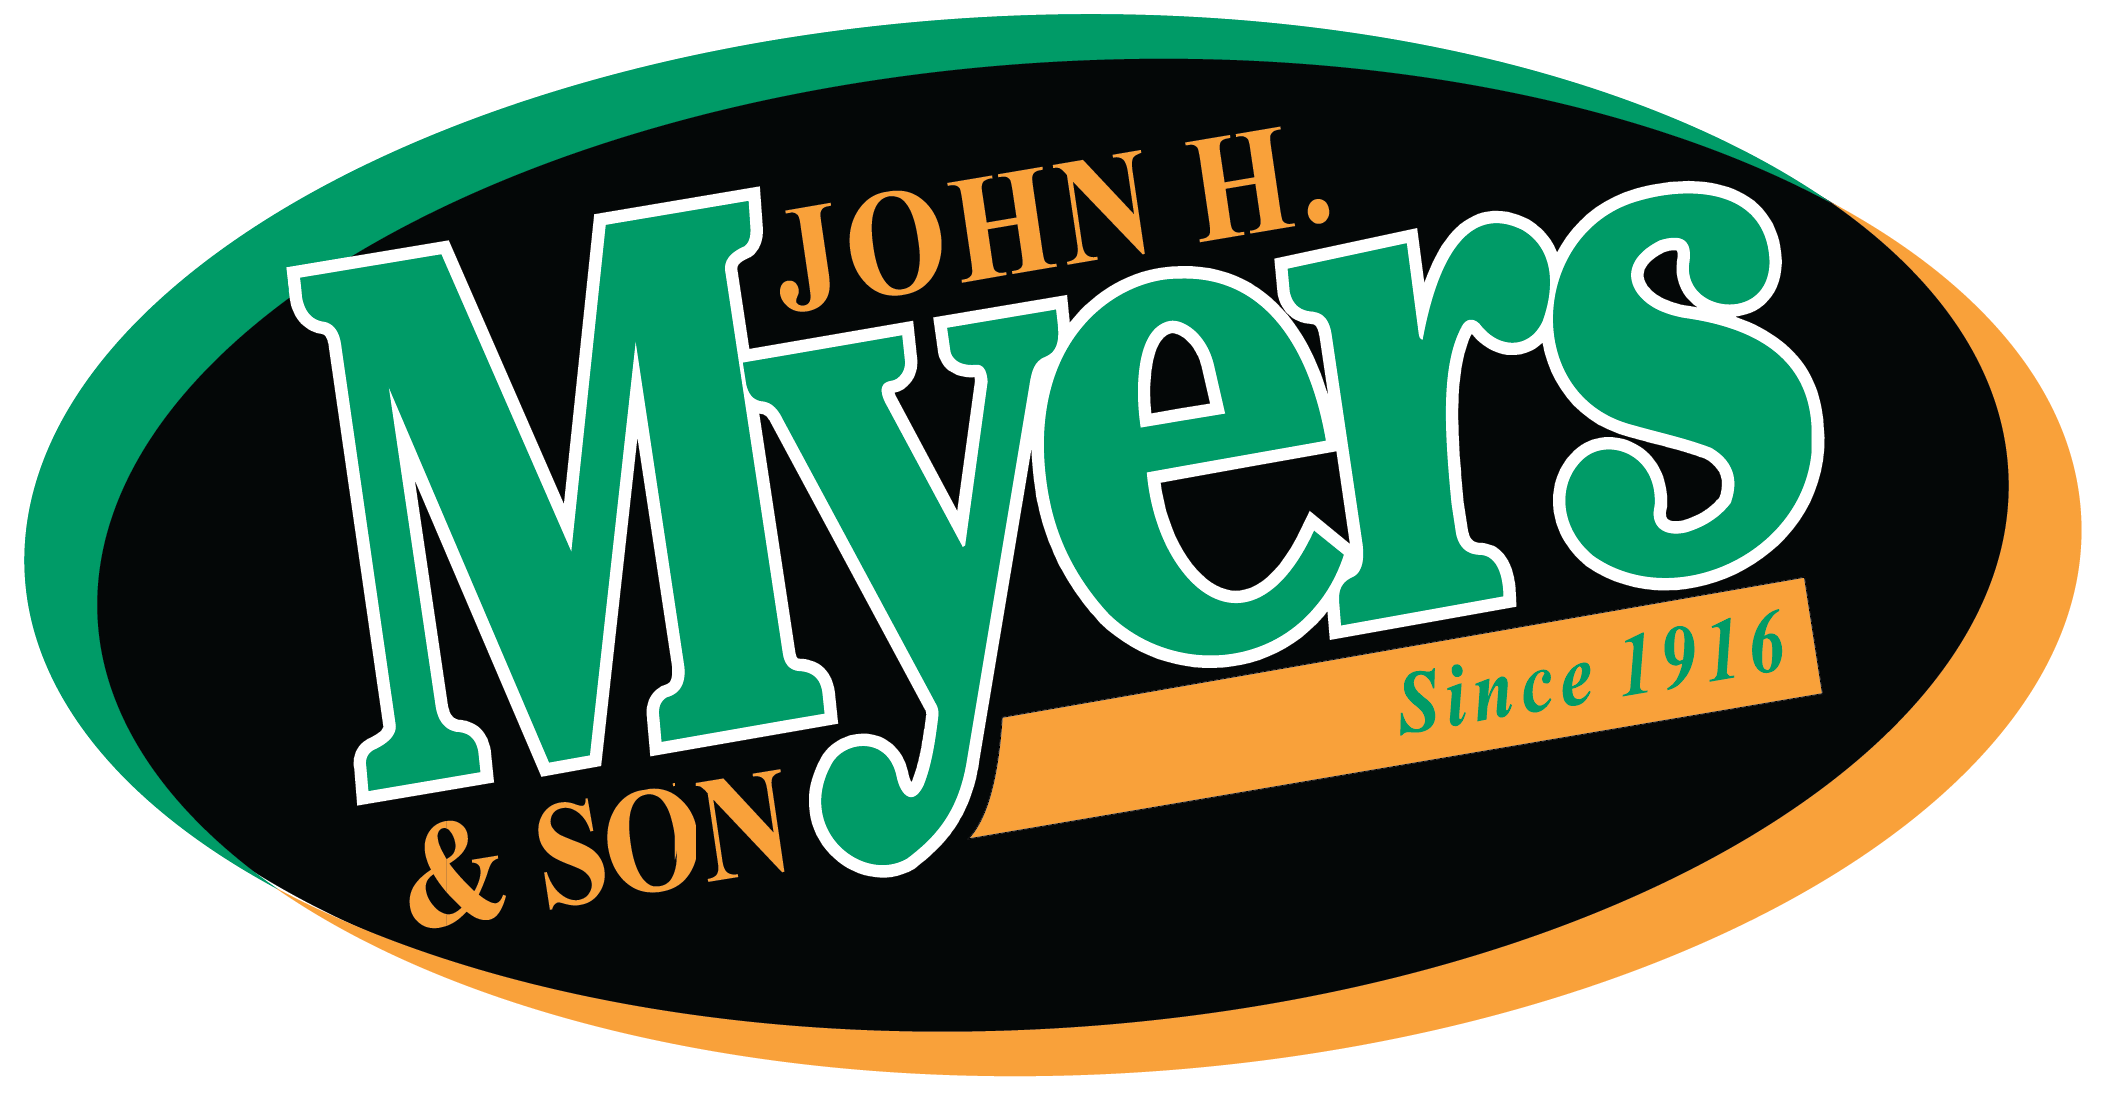 John H. Myers & Son - York logo